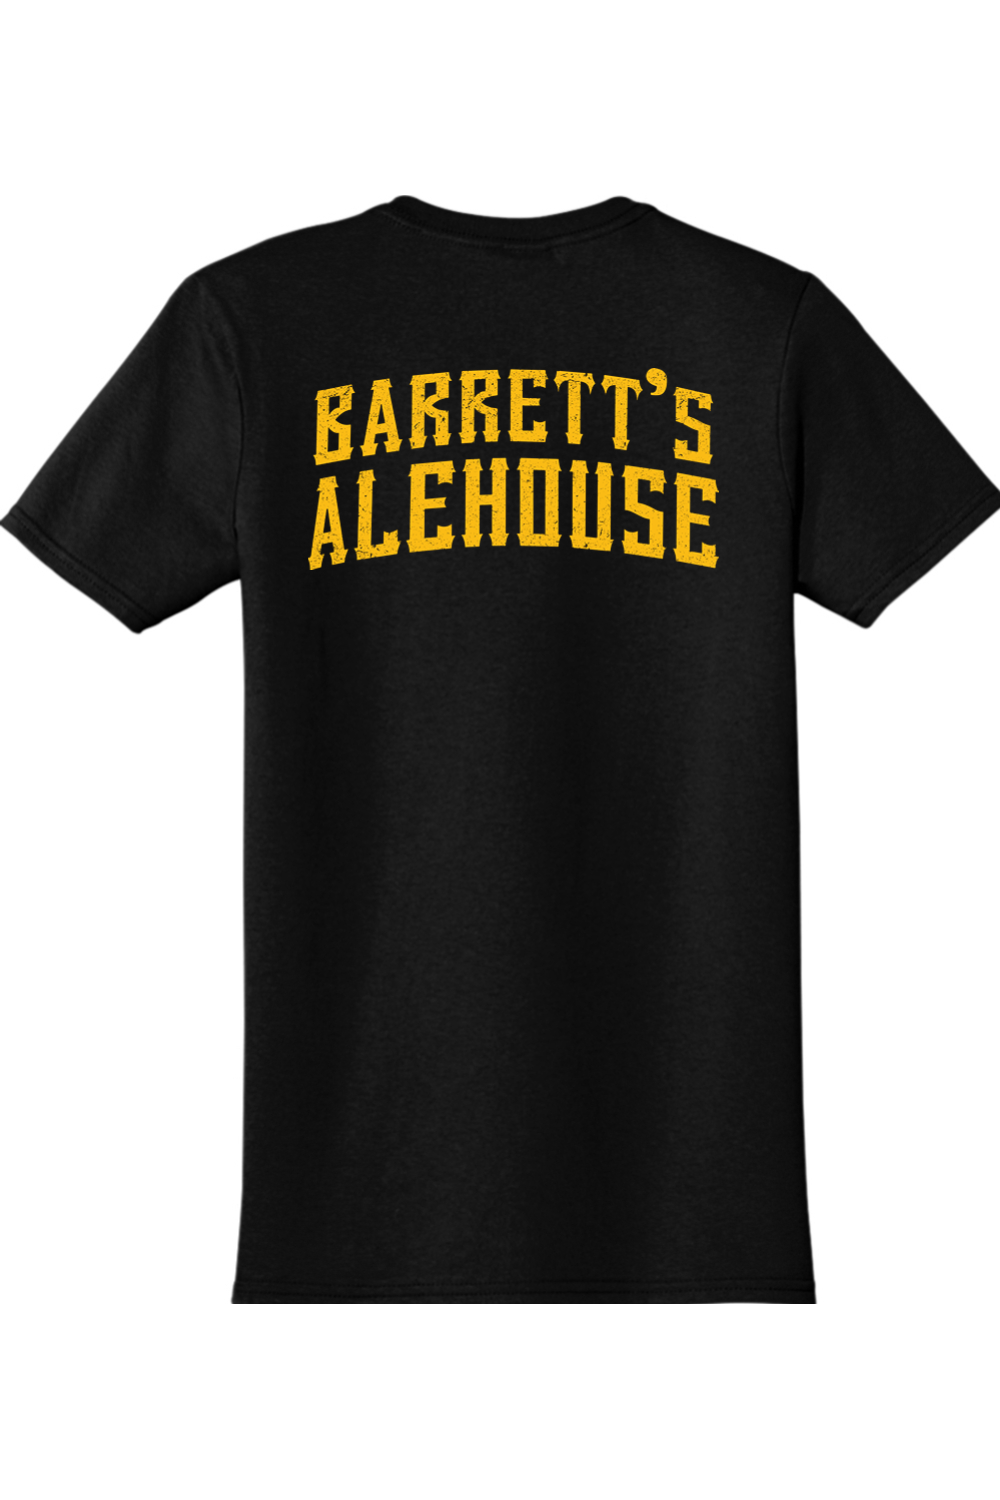 Barrett's Alehouse Black & Gold T-Shirt